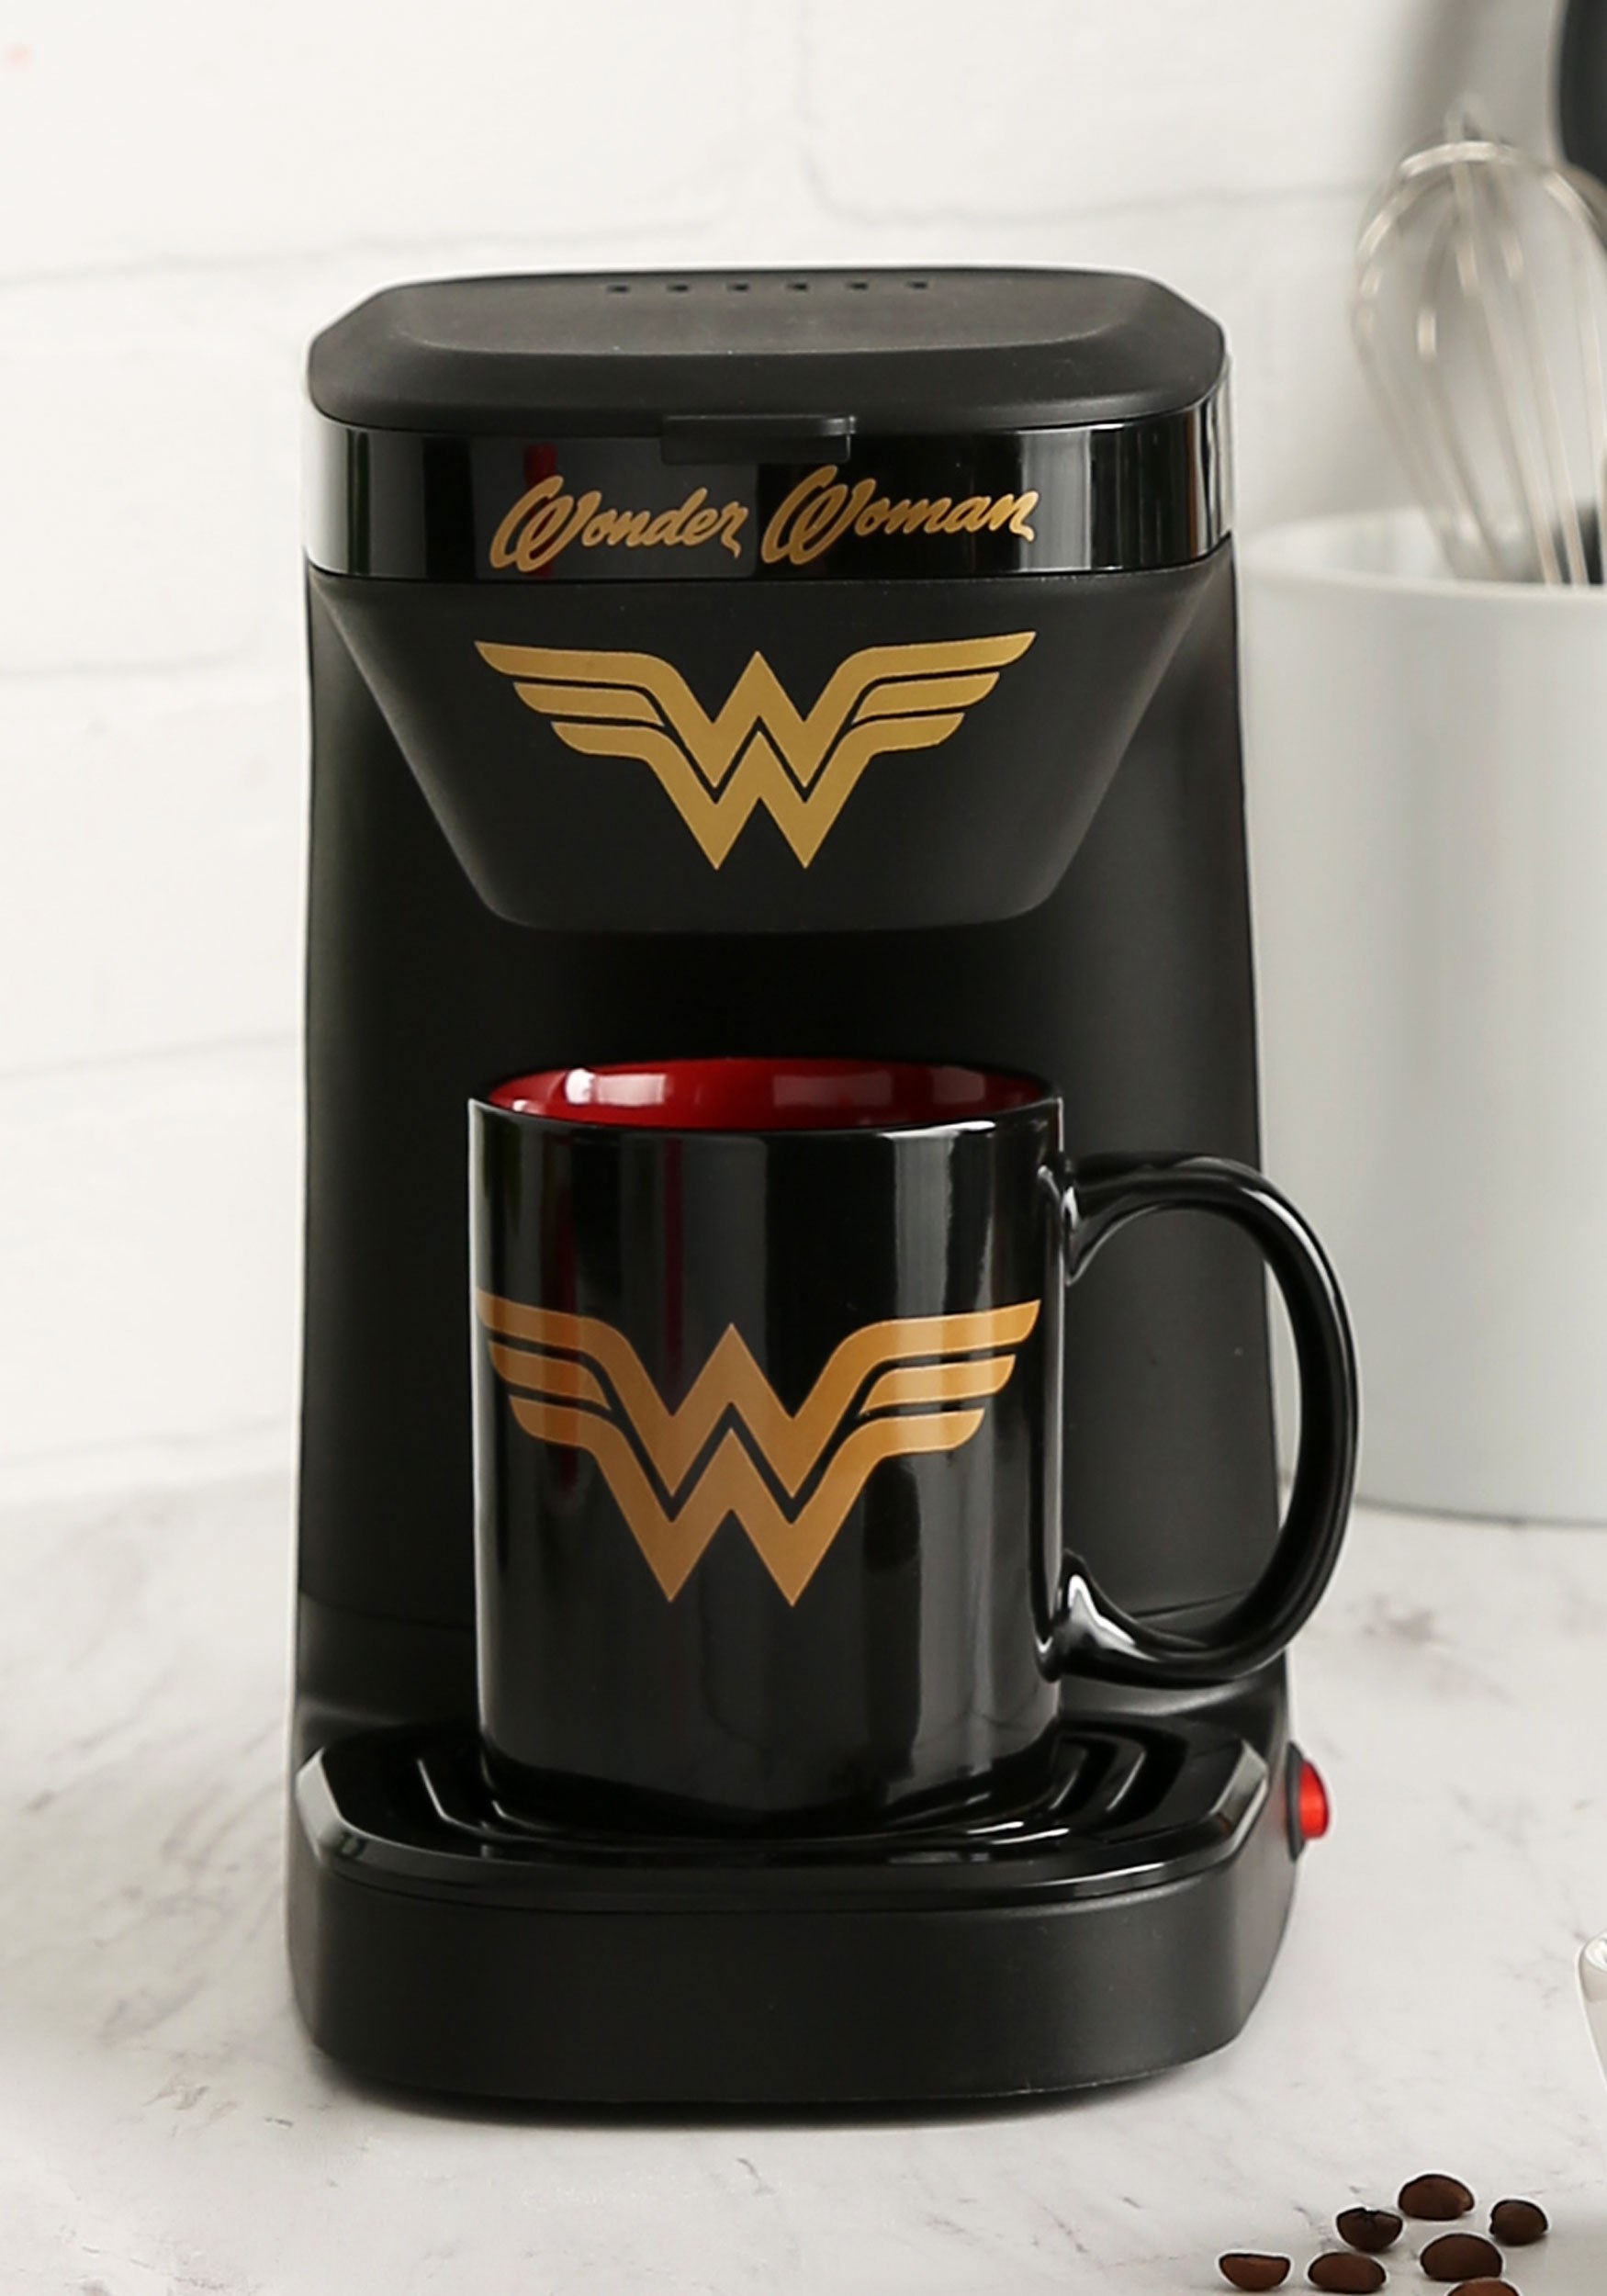 DC WONDER WOMAN 1 CUP COFFEE MAKER